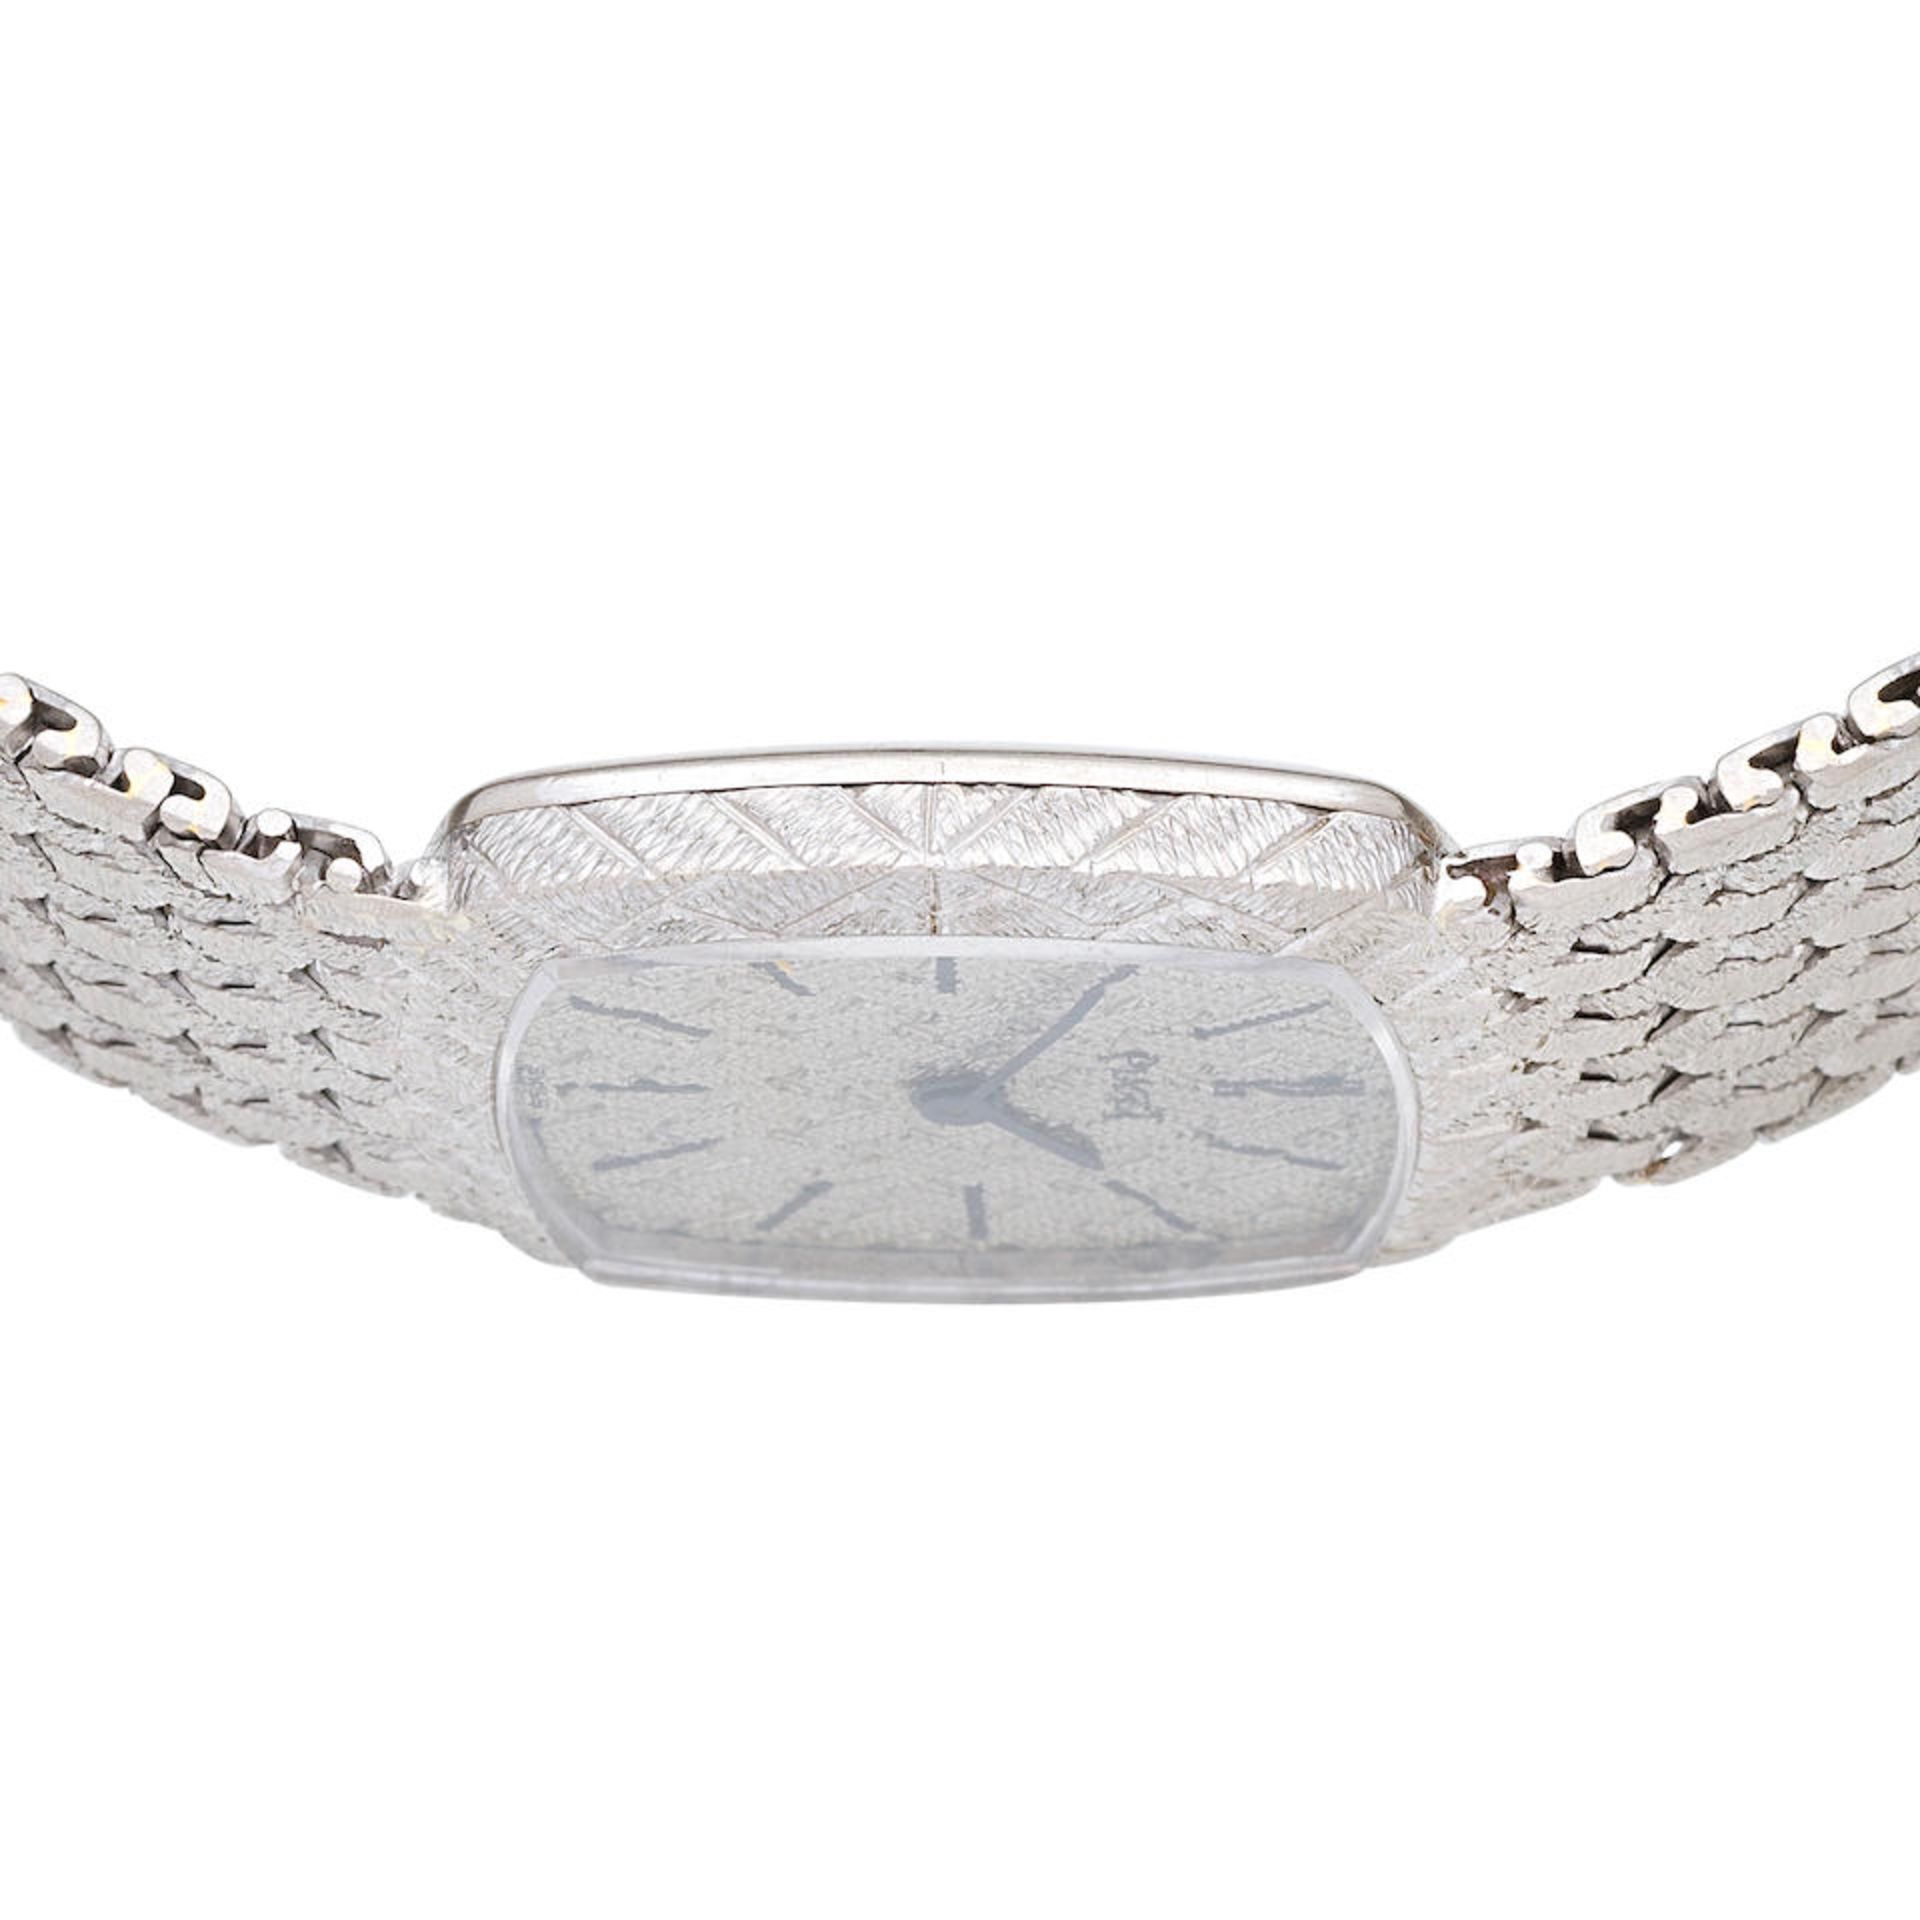 Piaget. A lady's 18K white gold manual wind bracelet watch Ref: 9231 P5, Birmingham Import Mark ... - Image 2 of 5